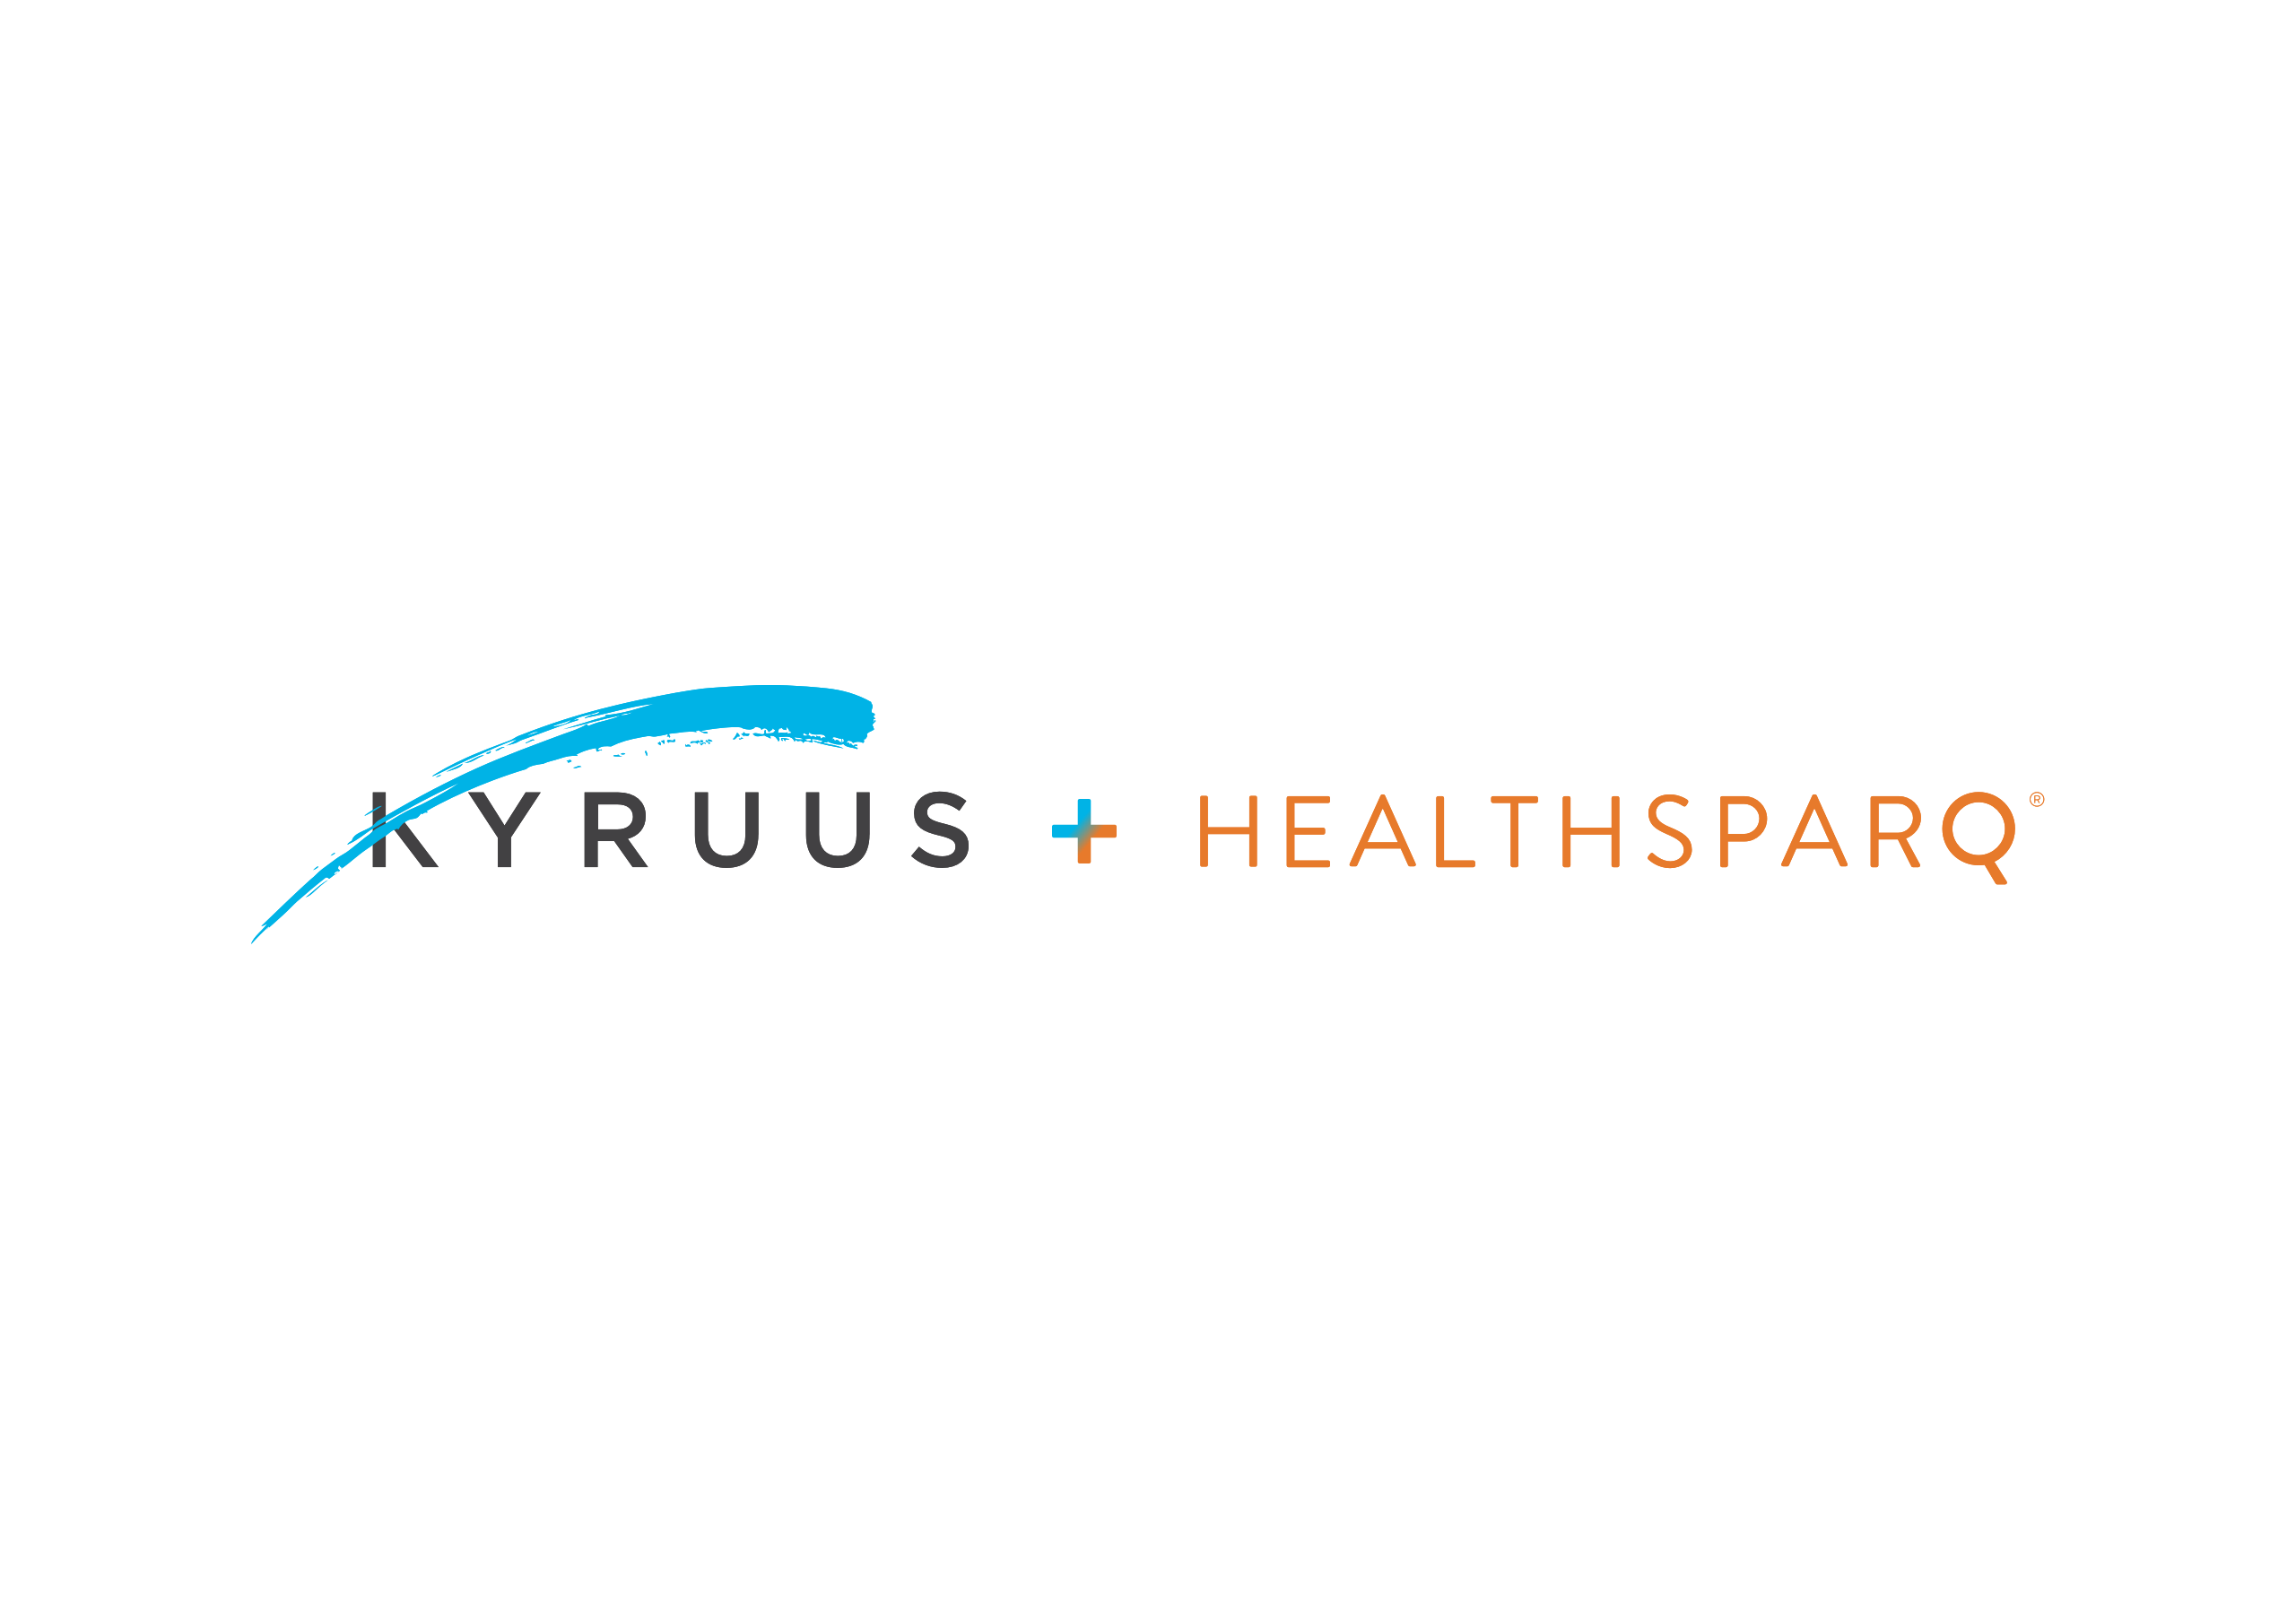 Kyruus + HealthSparq